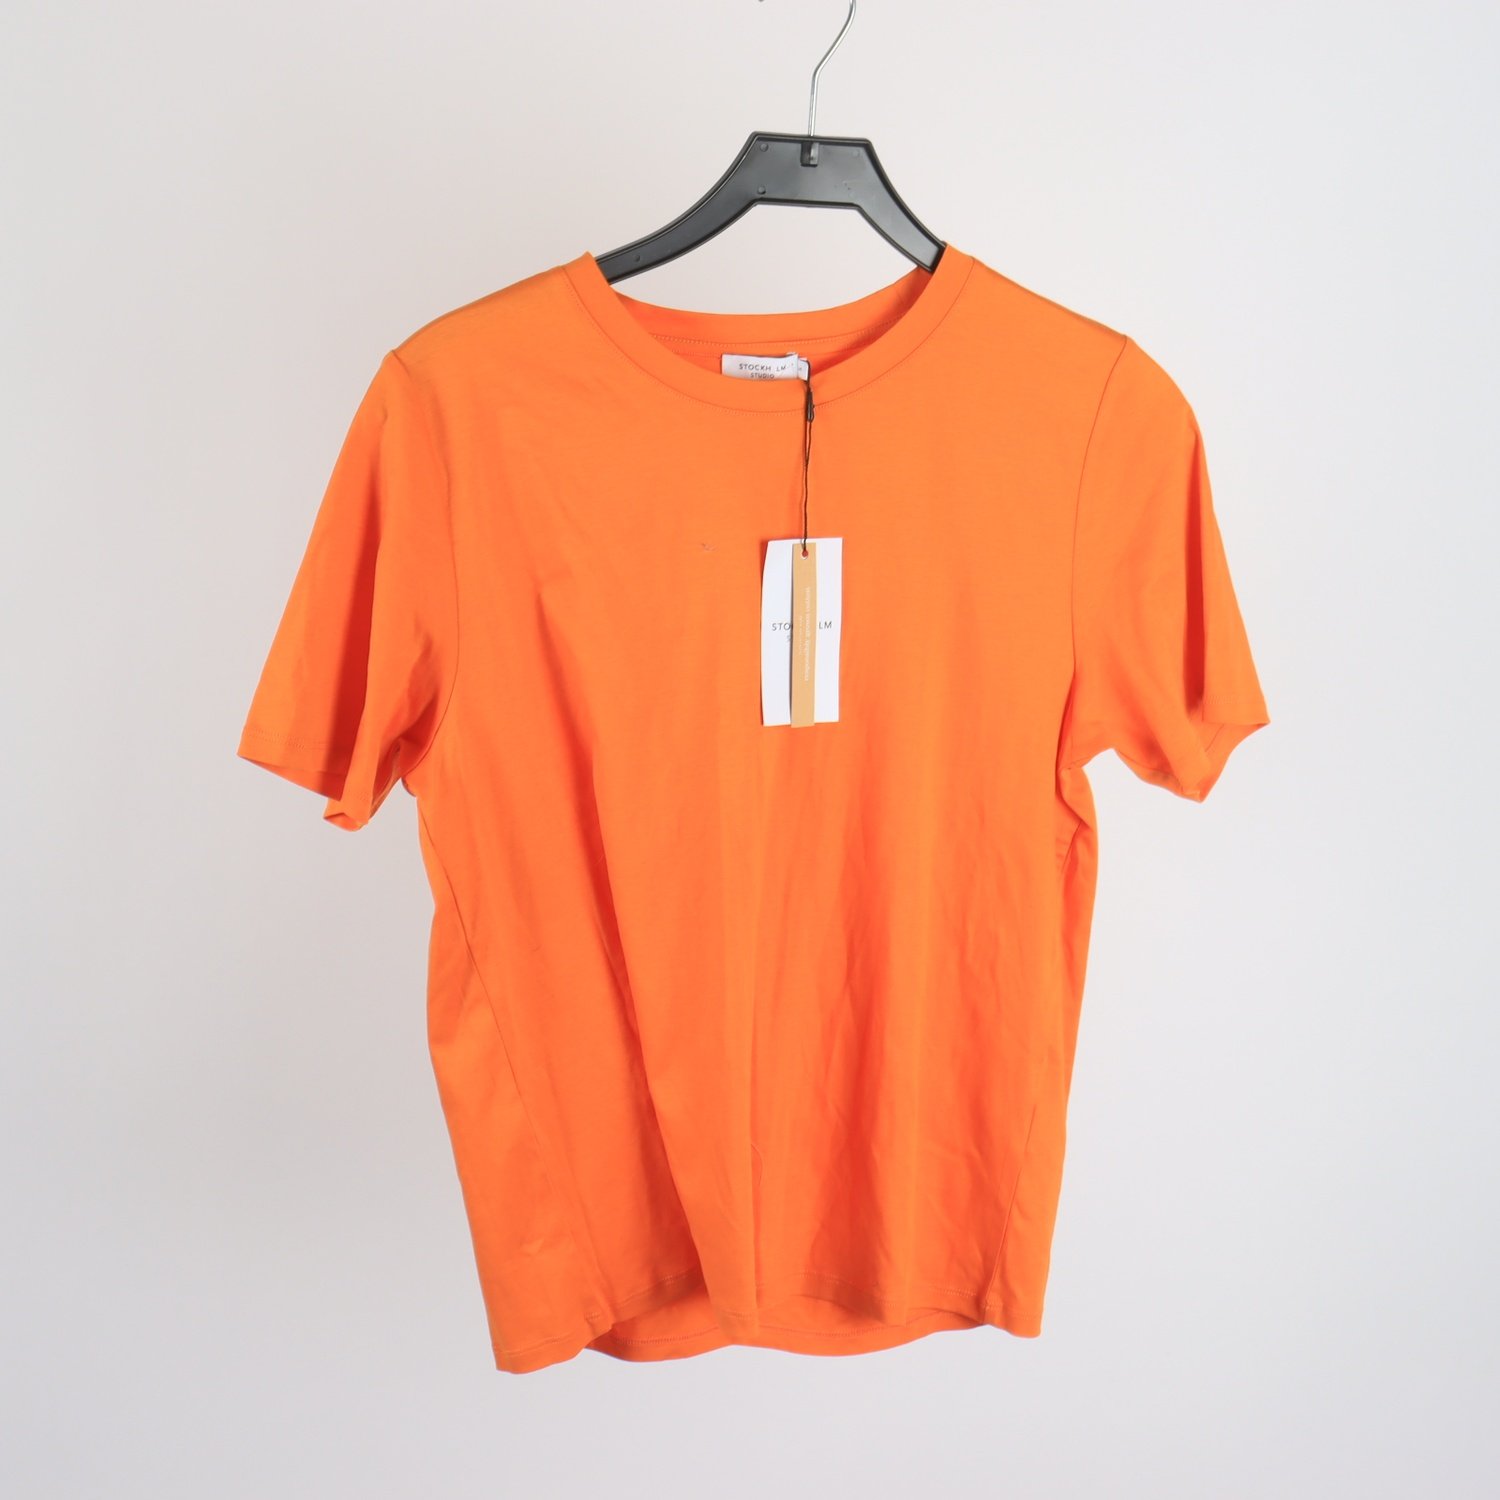 T-shirt, Stockh LM Studio, orange, stl. S